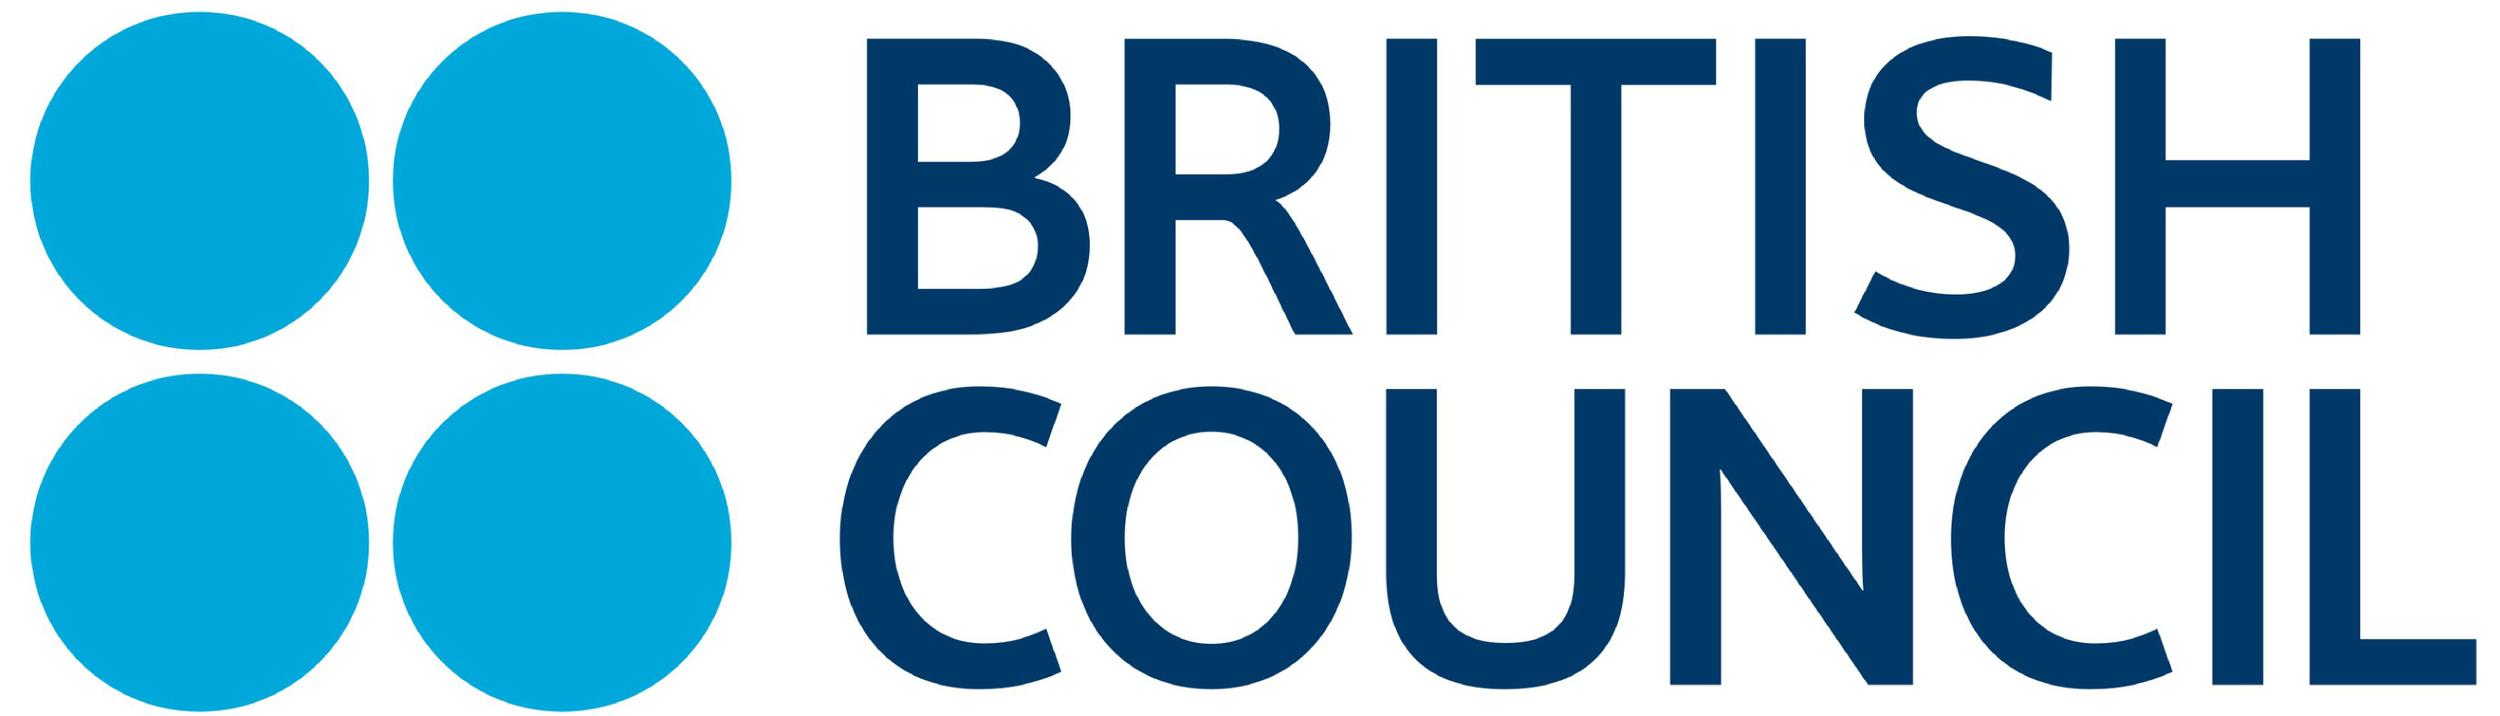 british-council-logo-2-color-2-page-001-hr.jpg